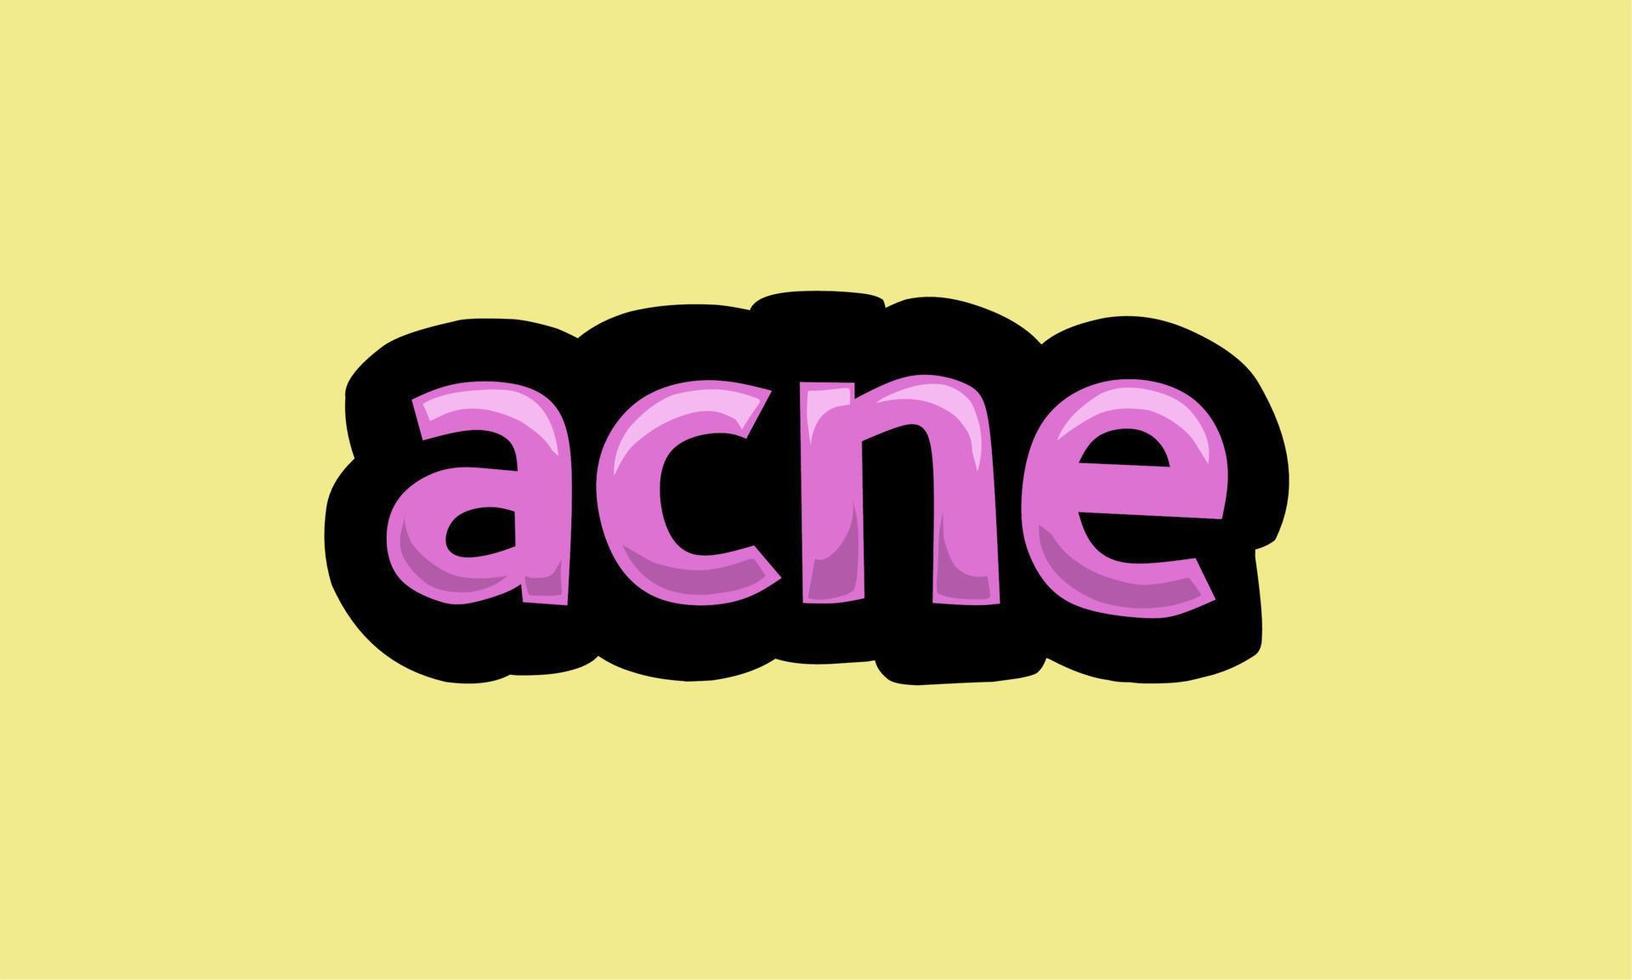 diseño vectorial de escritura de acné en un fondo amarillo vector